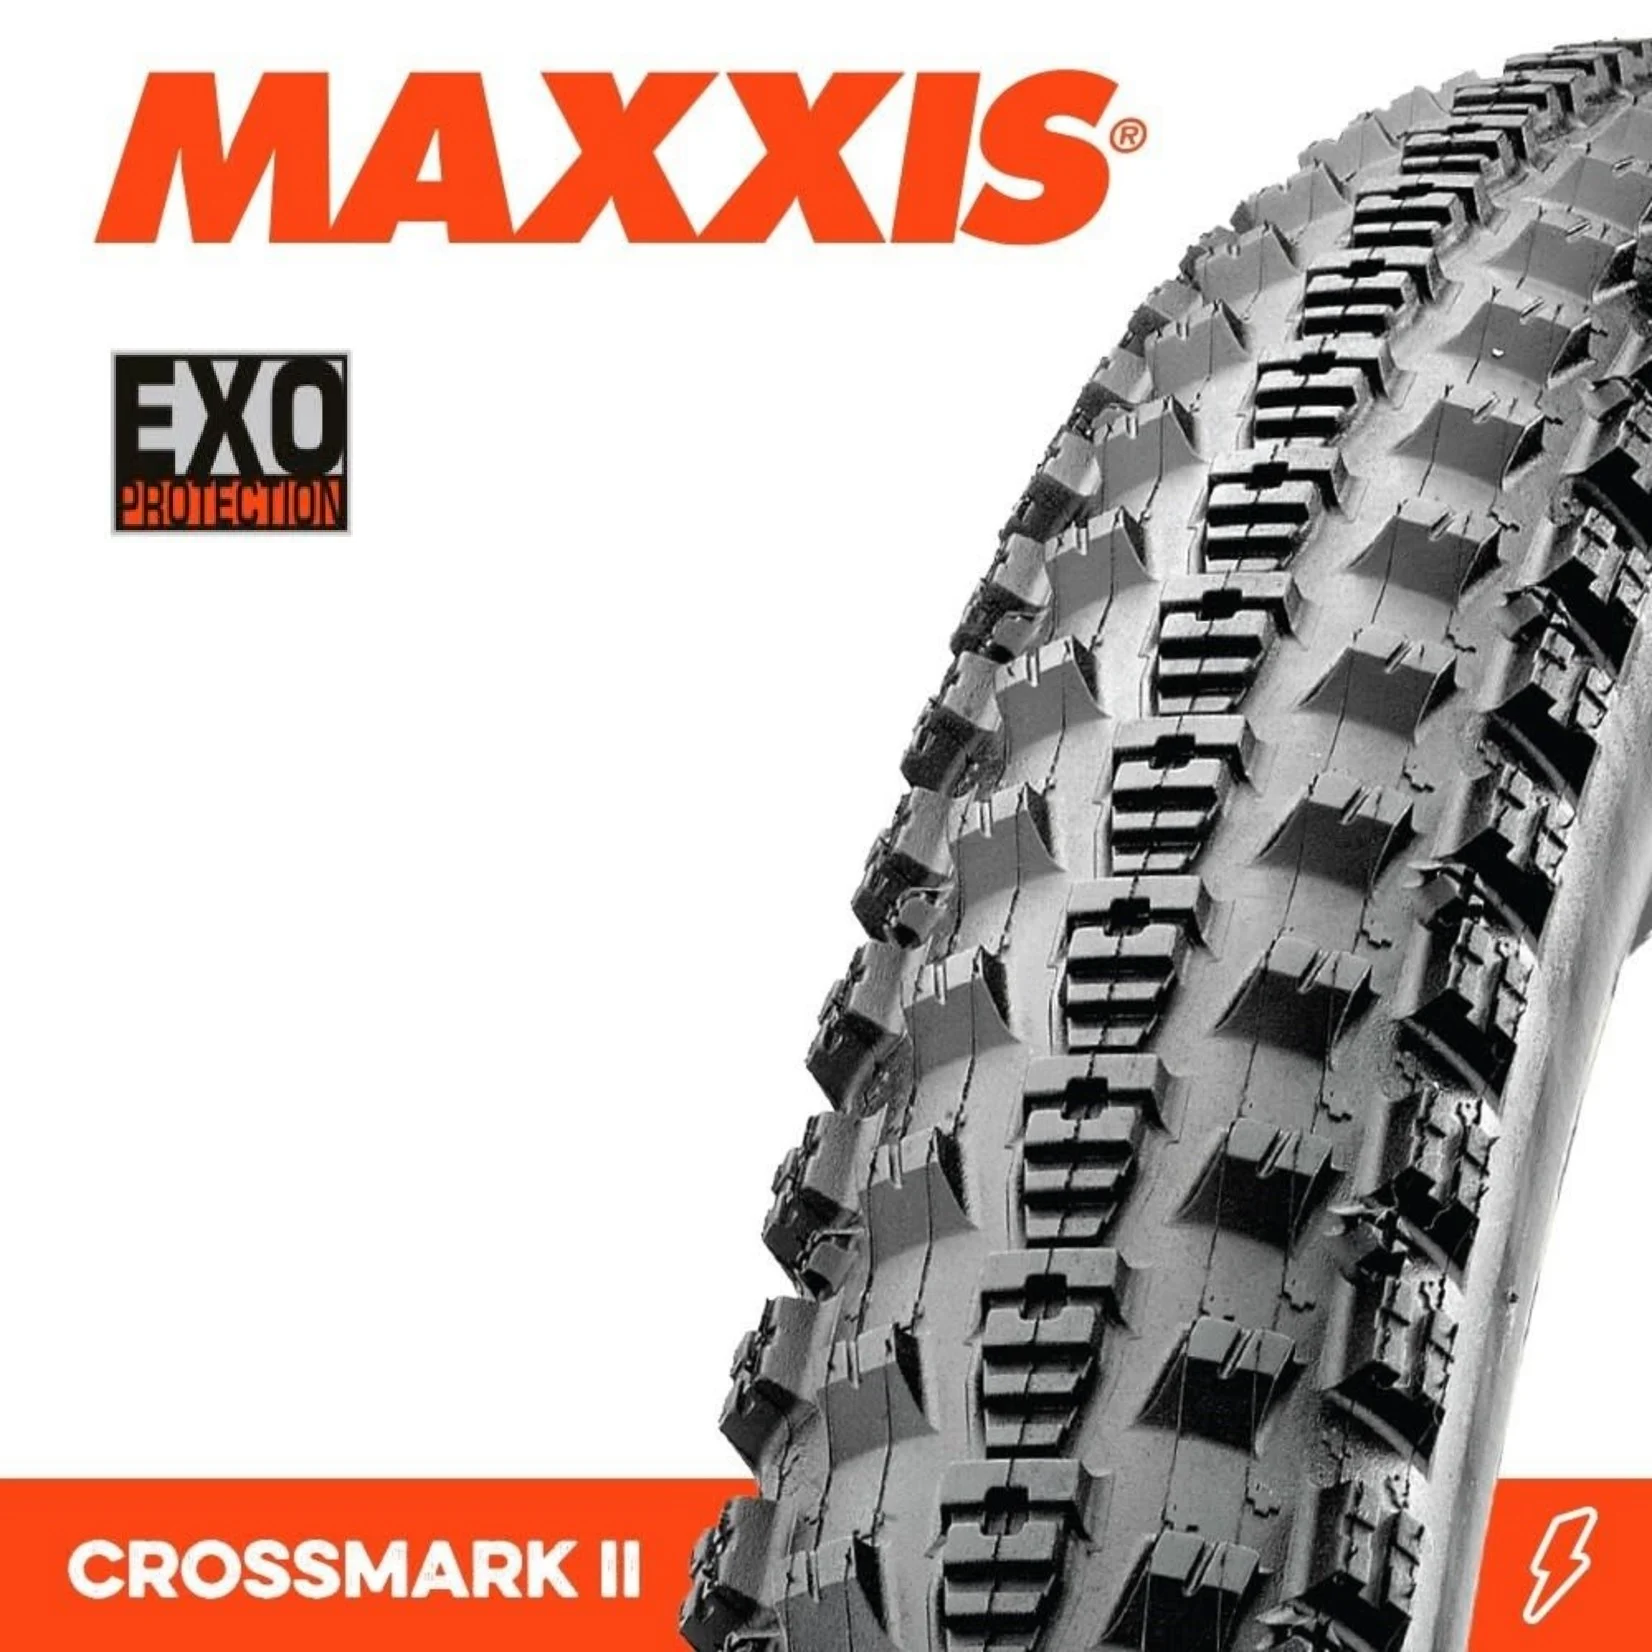 لاستیک دوچرخه مکسس 2.25×27.5 2 MAXXIS crossmark